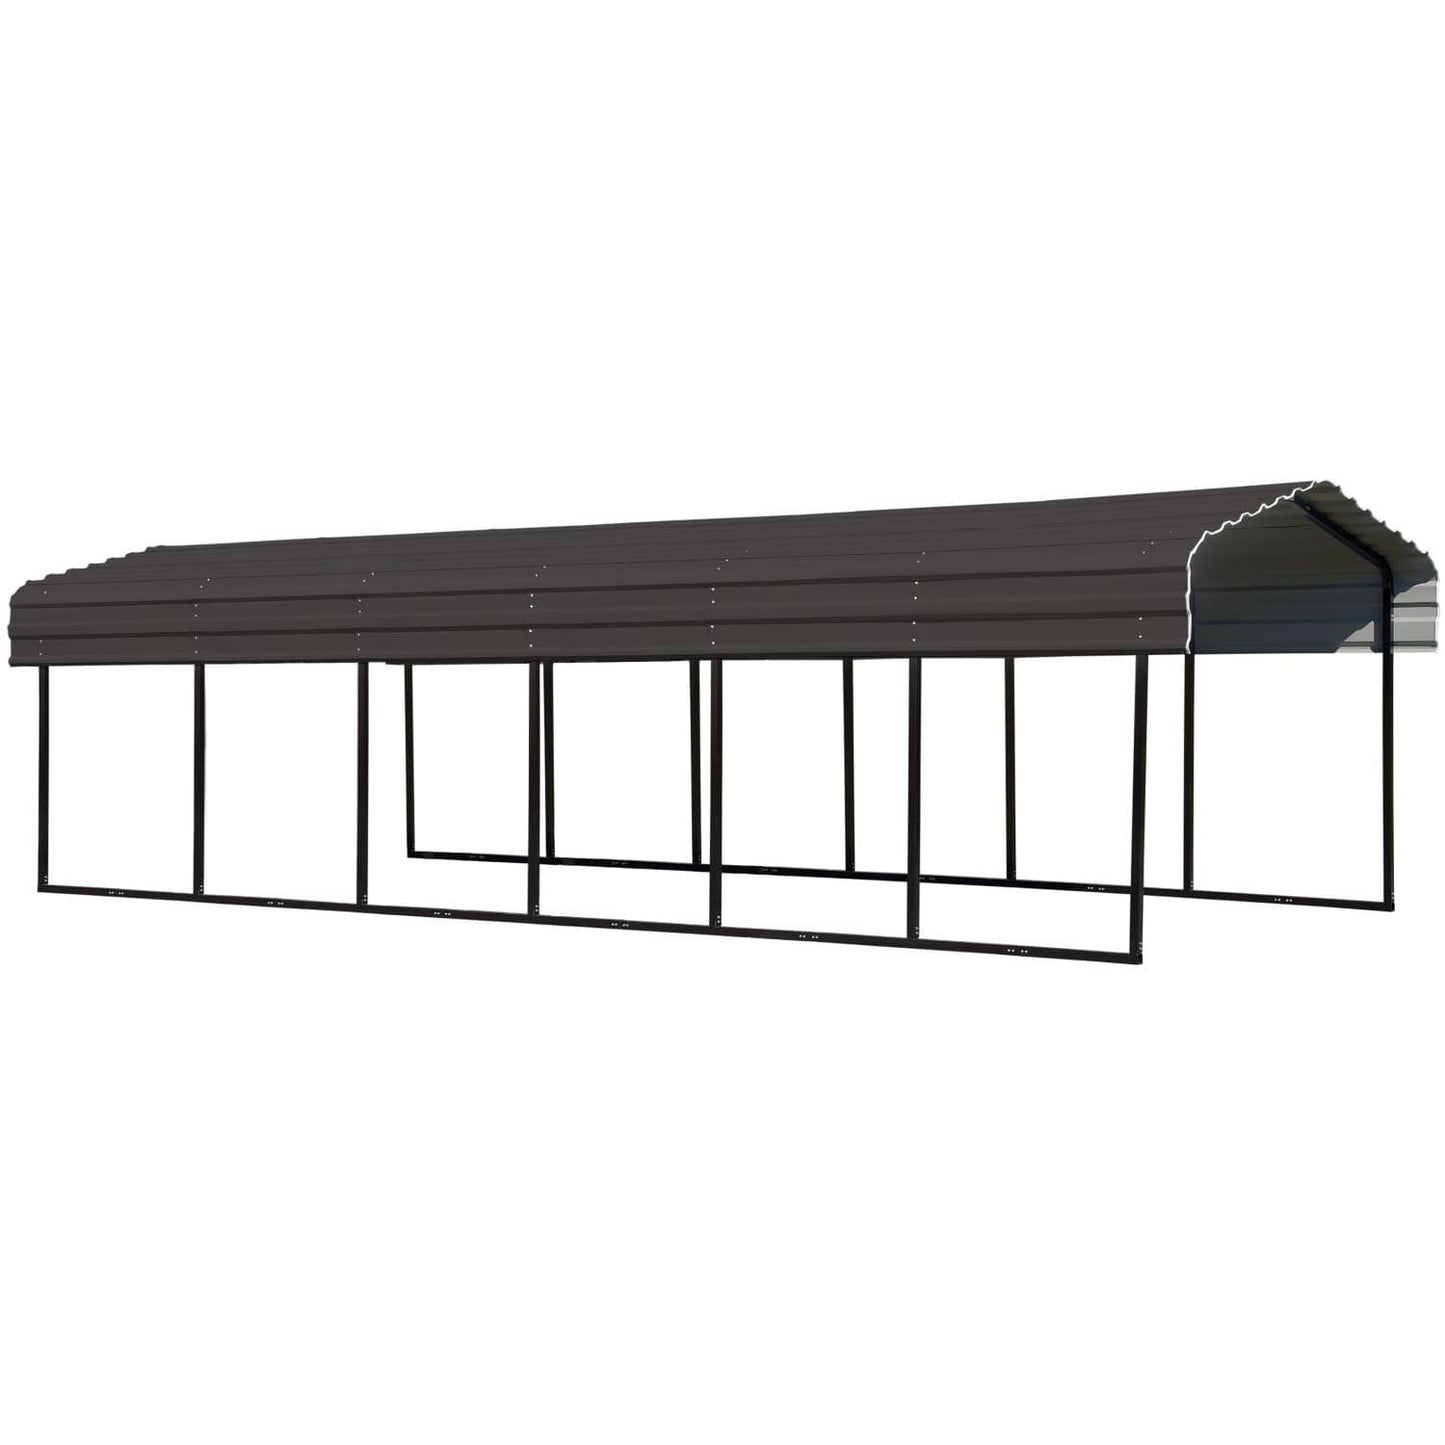 Arrow Steel Carport 10' x 29' x 7' Galvanized Black/Charcoal - mygreenhousestore.com